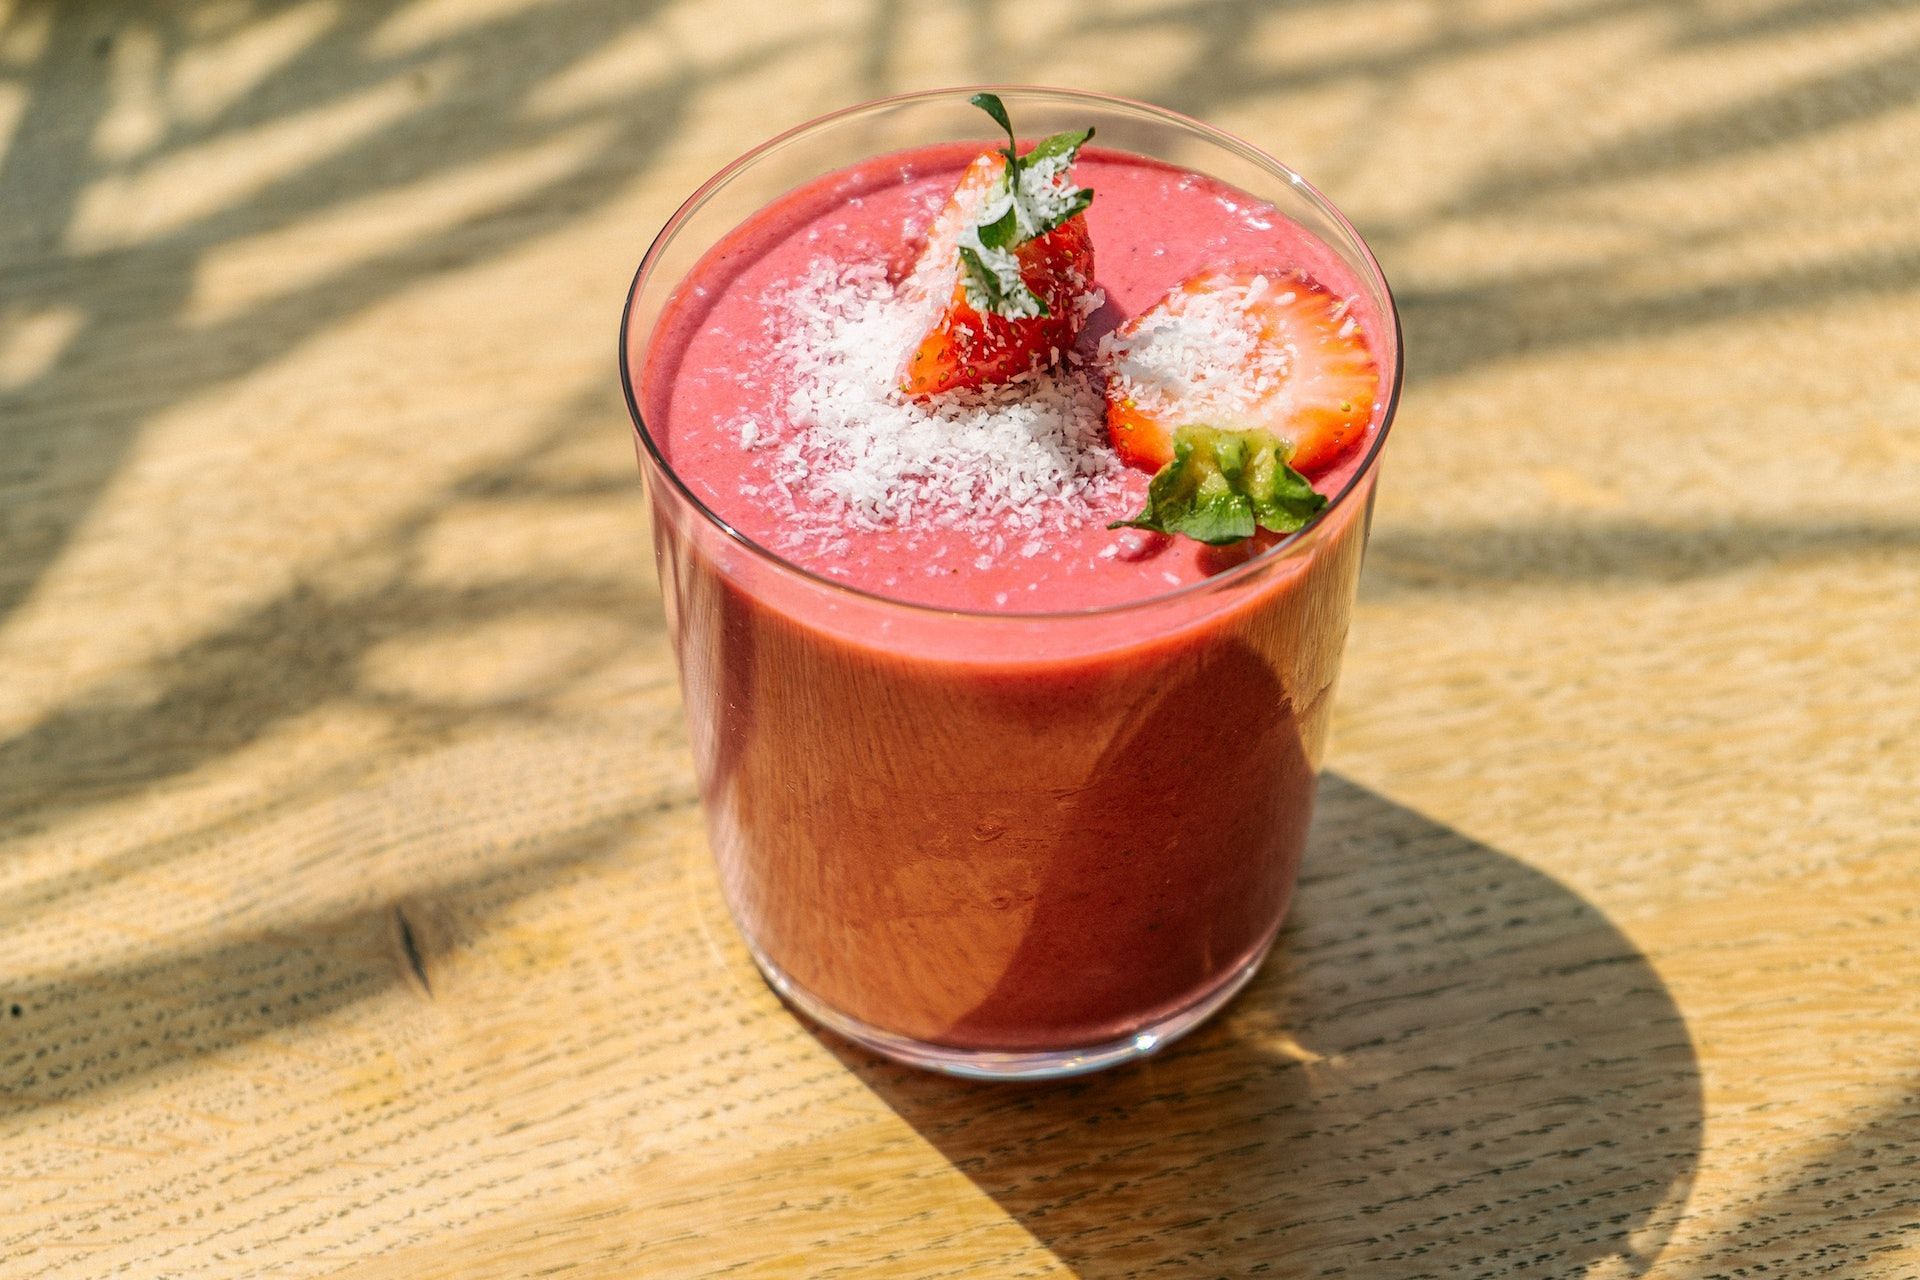 Prune juice is healthy and nutritious.(Photo via Pexels/Antoni Shkraba)